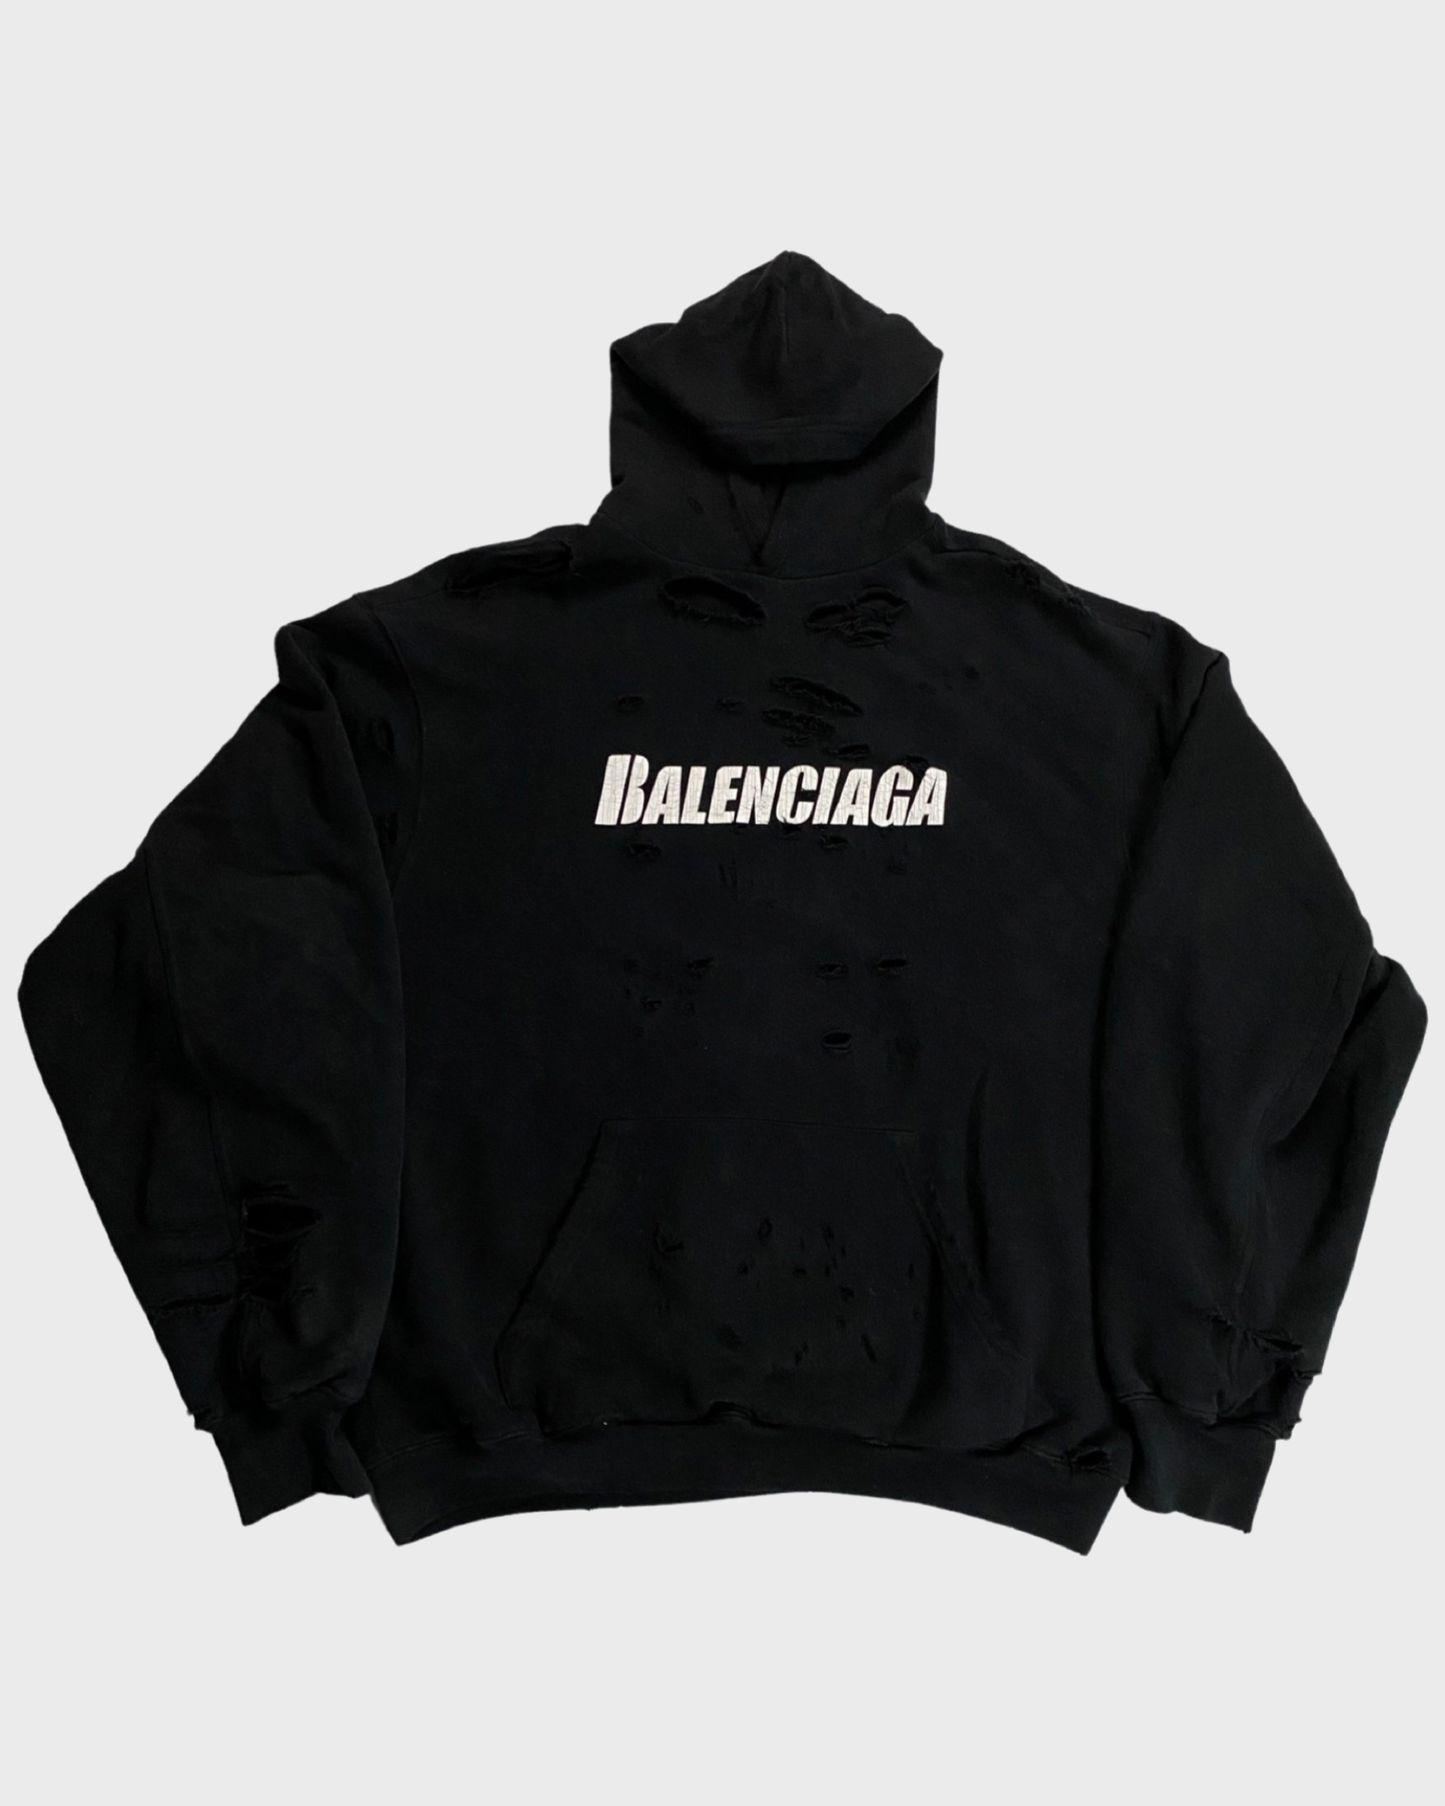 Balenciaga Destroyed logo hoodie in black Size:XXS